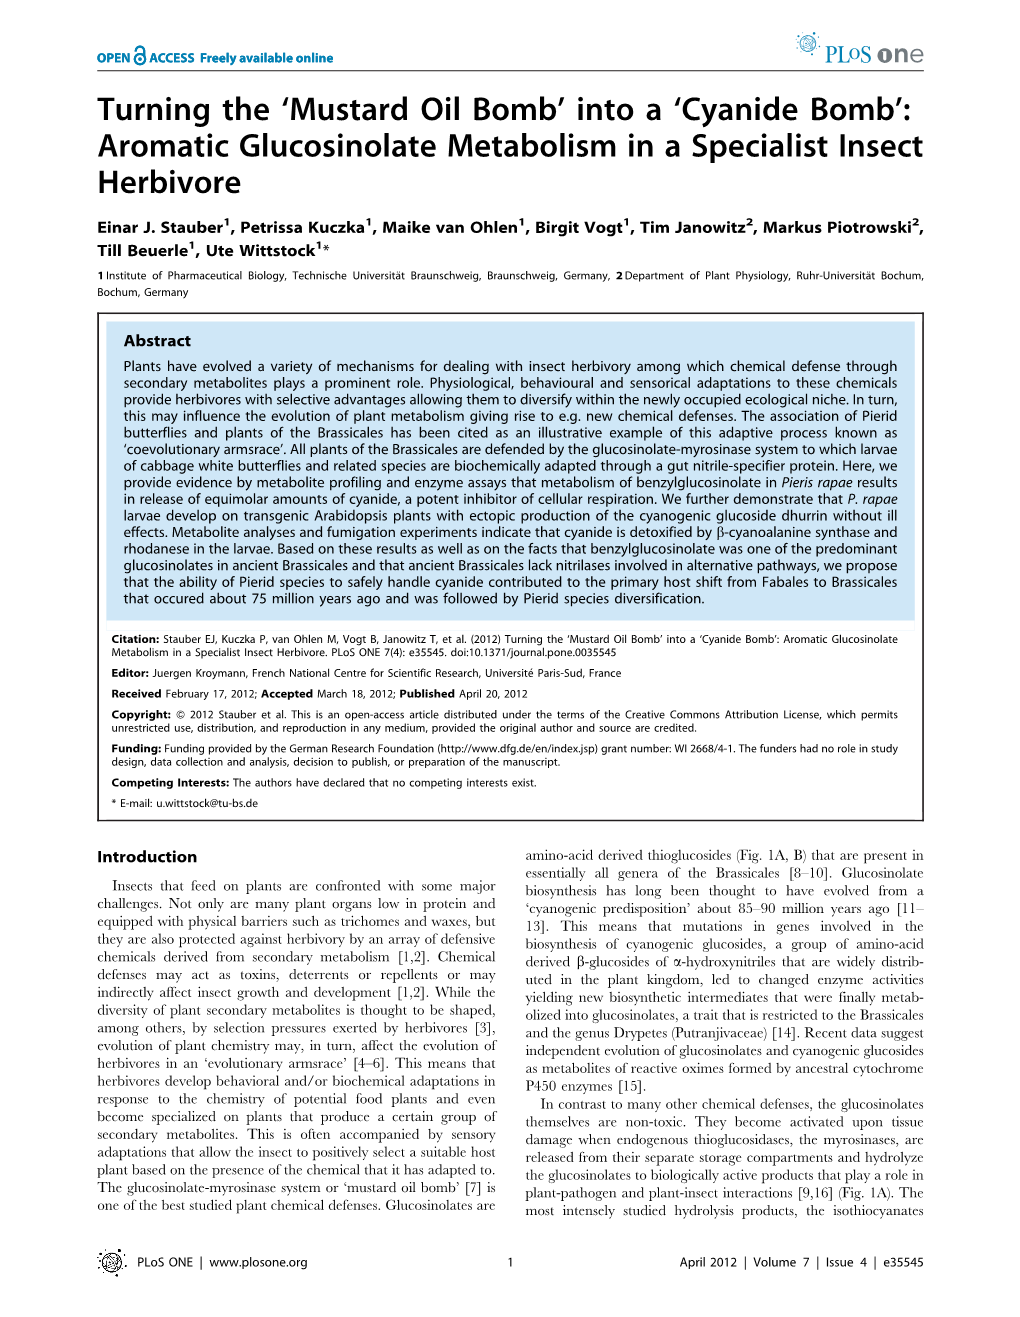 Aromatic Glucosinolate Metabolism in a Specialist Insect Herbivore